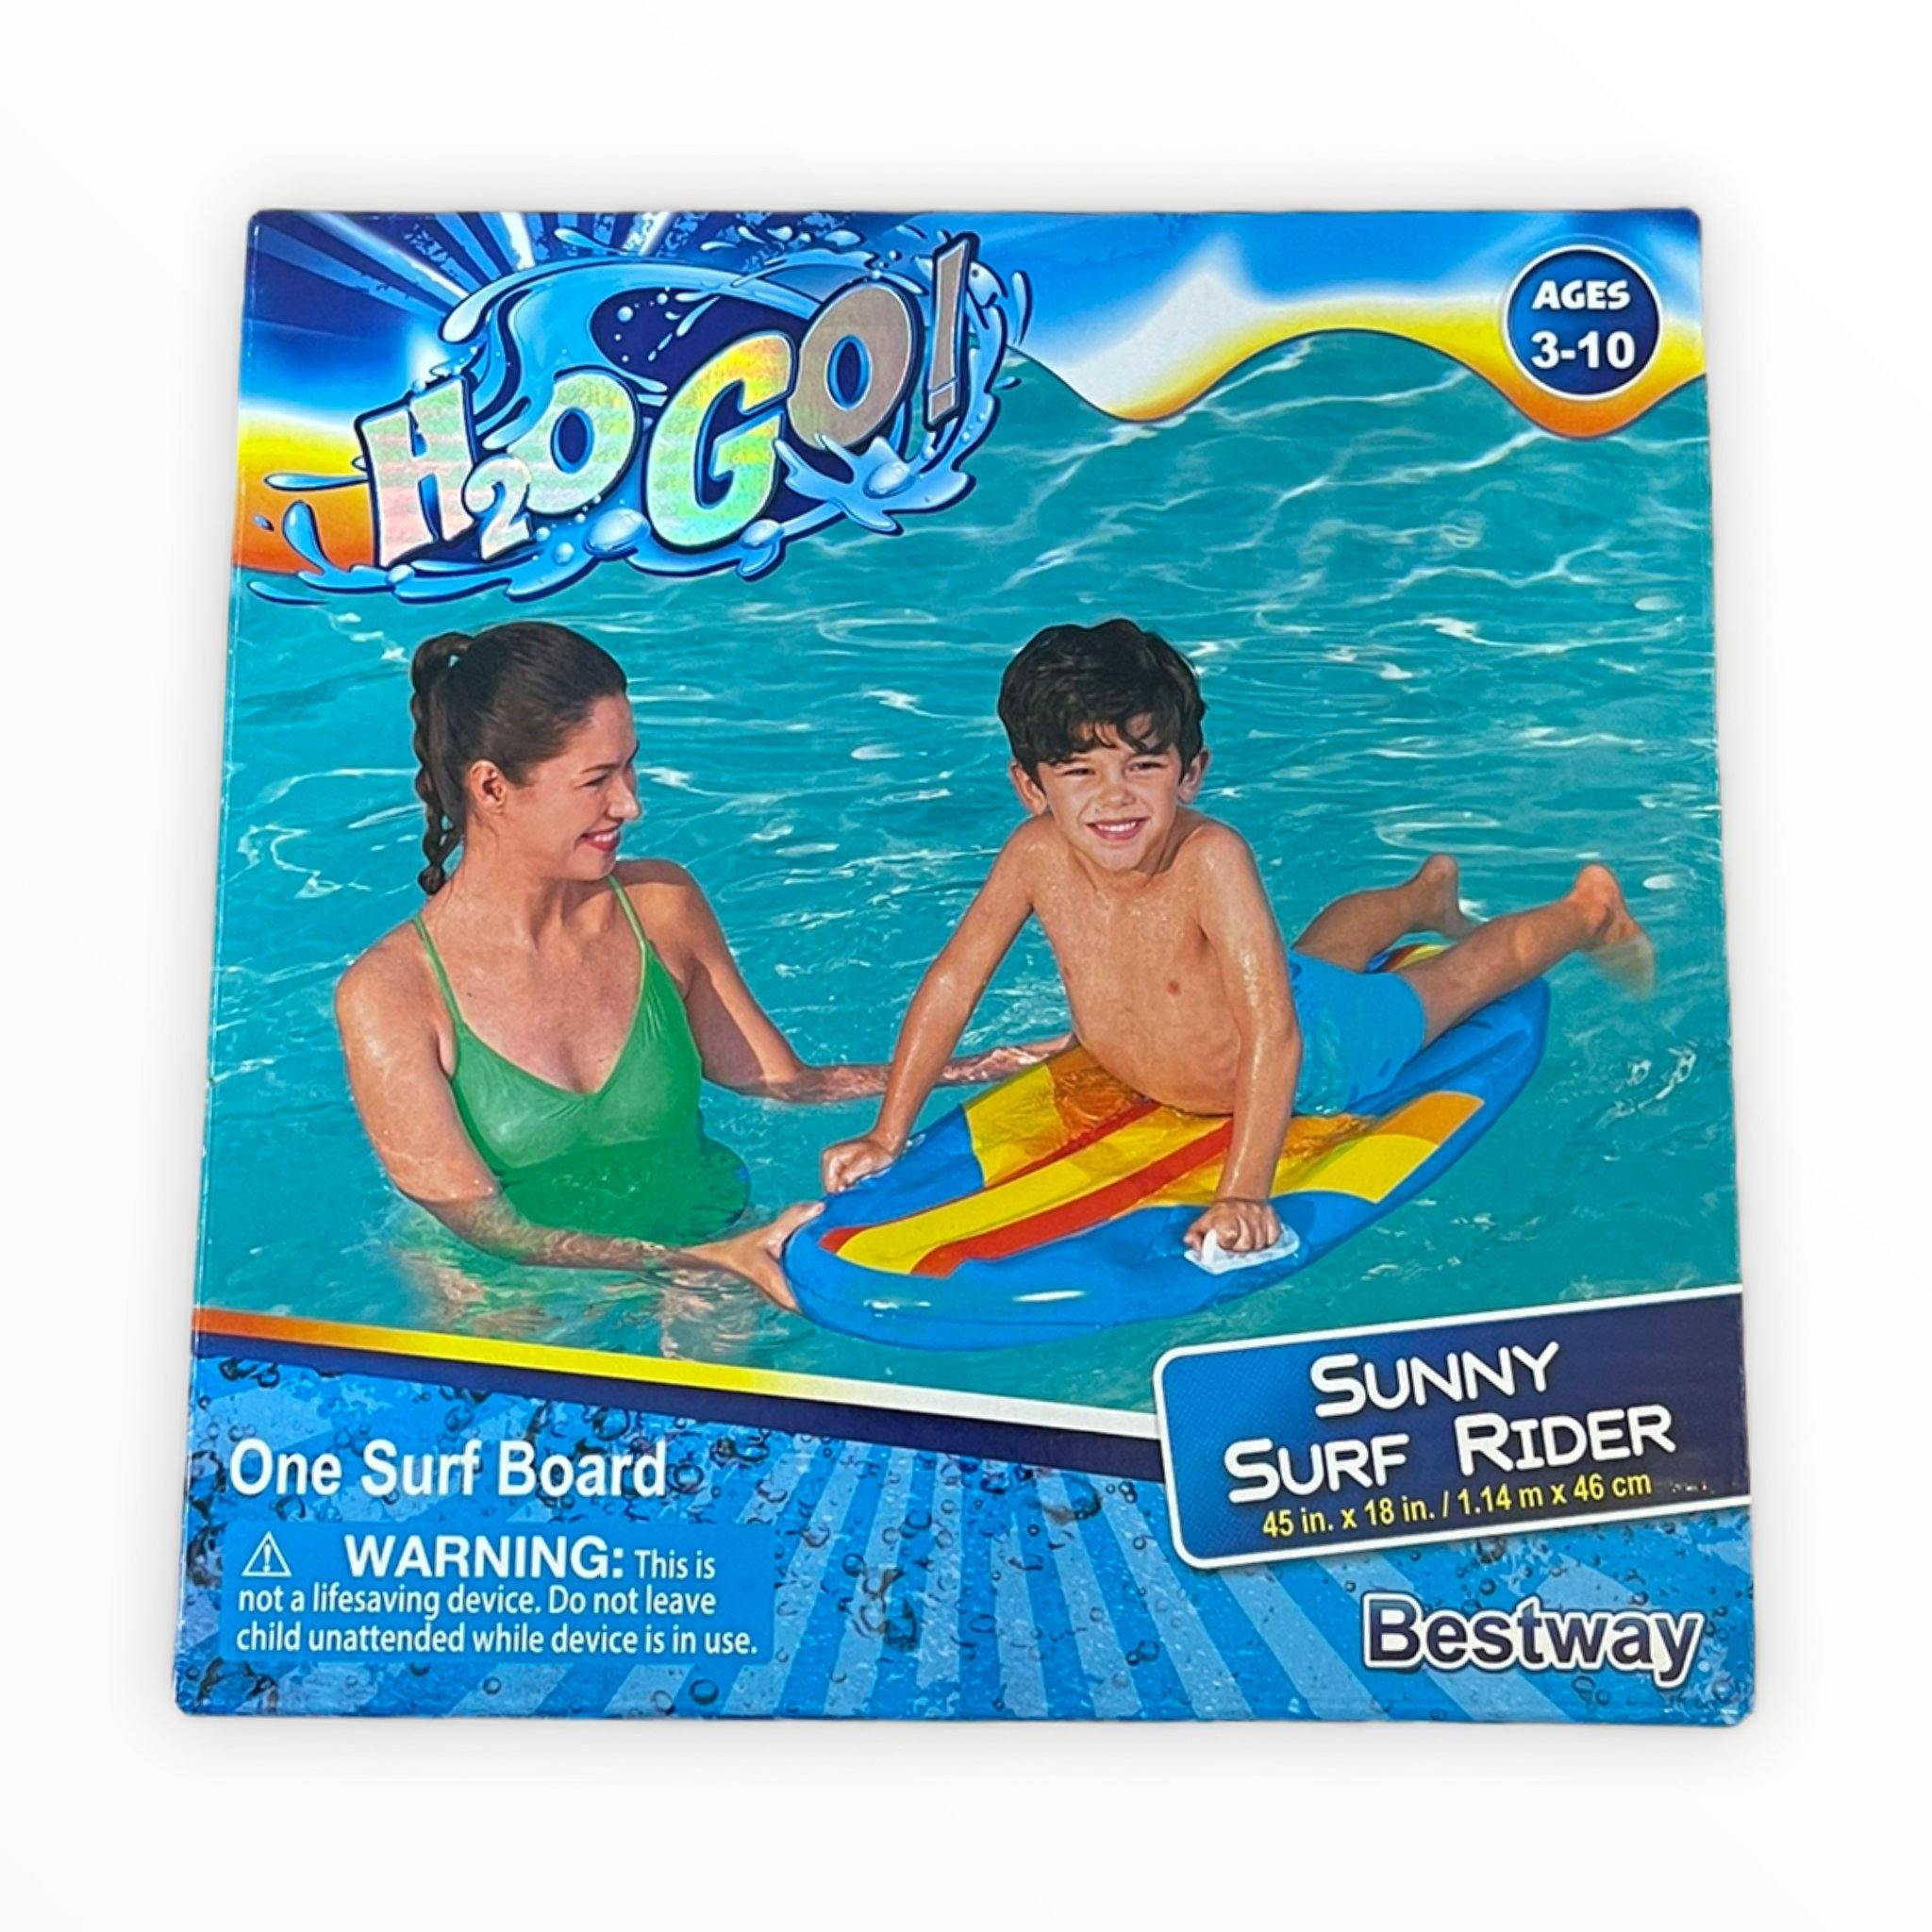 Bestway H2OGO 45 x 18 Sunny Surf Rider Rider Pool Float